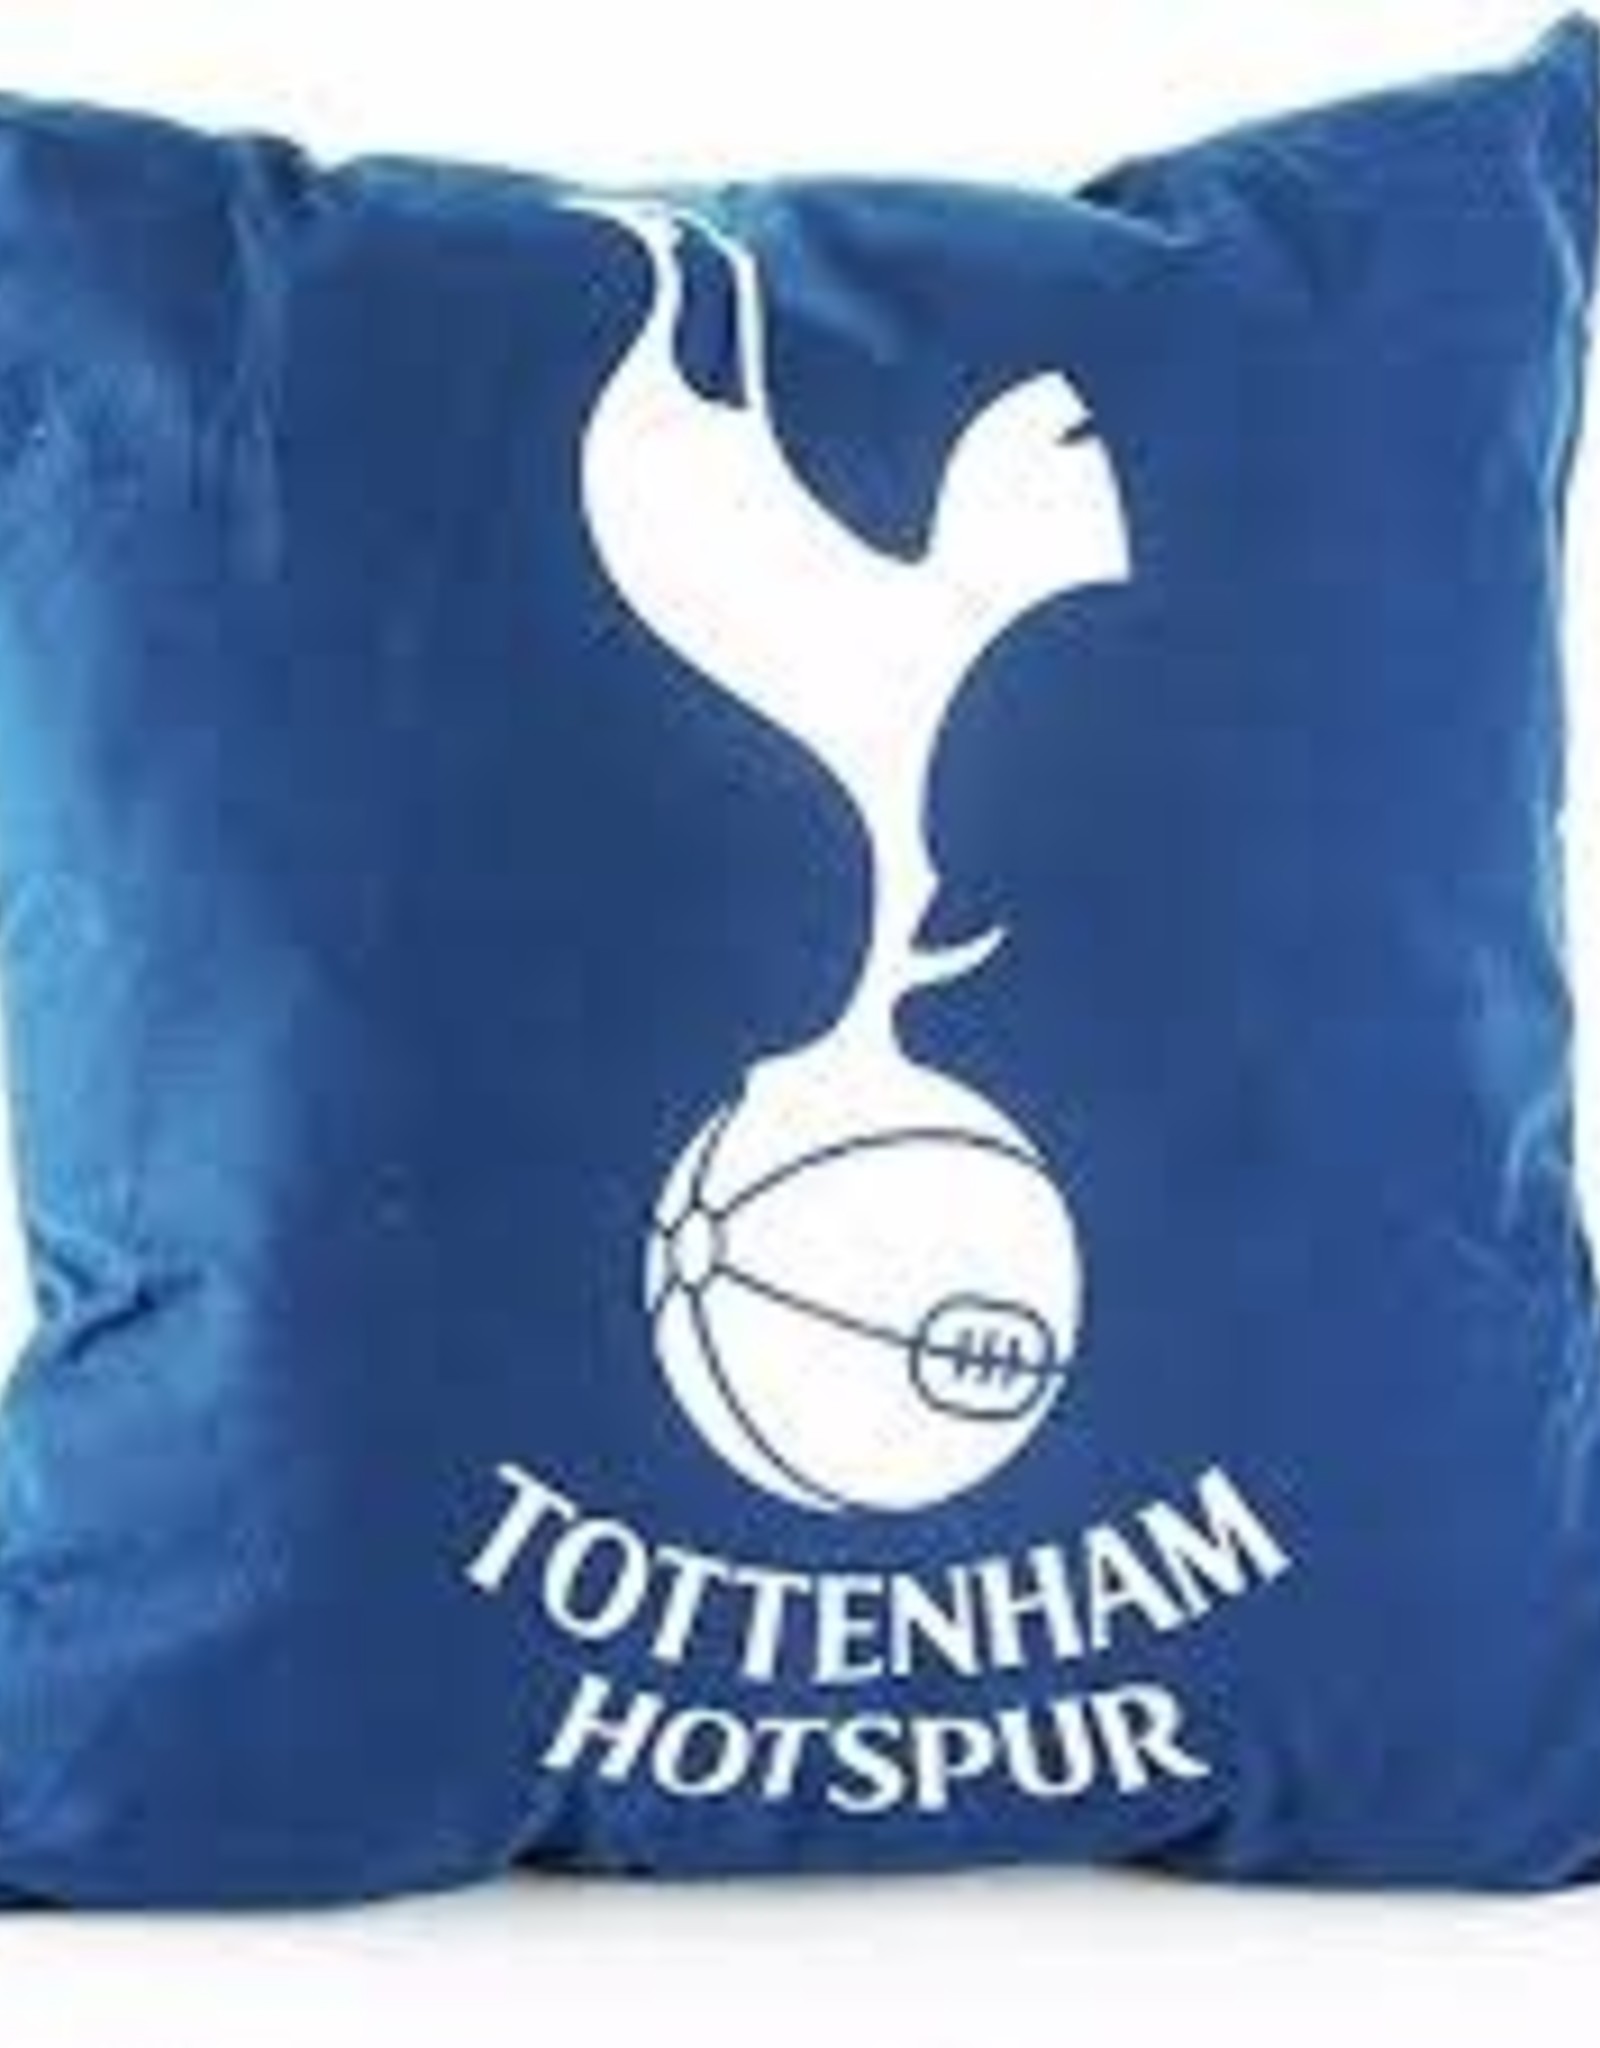 Tottenham Hotspur Crest cushion